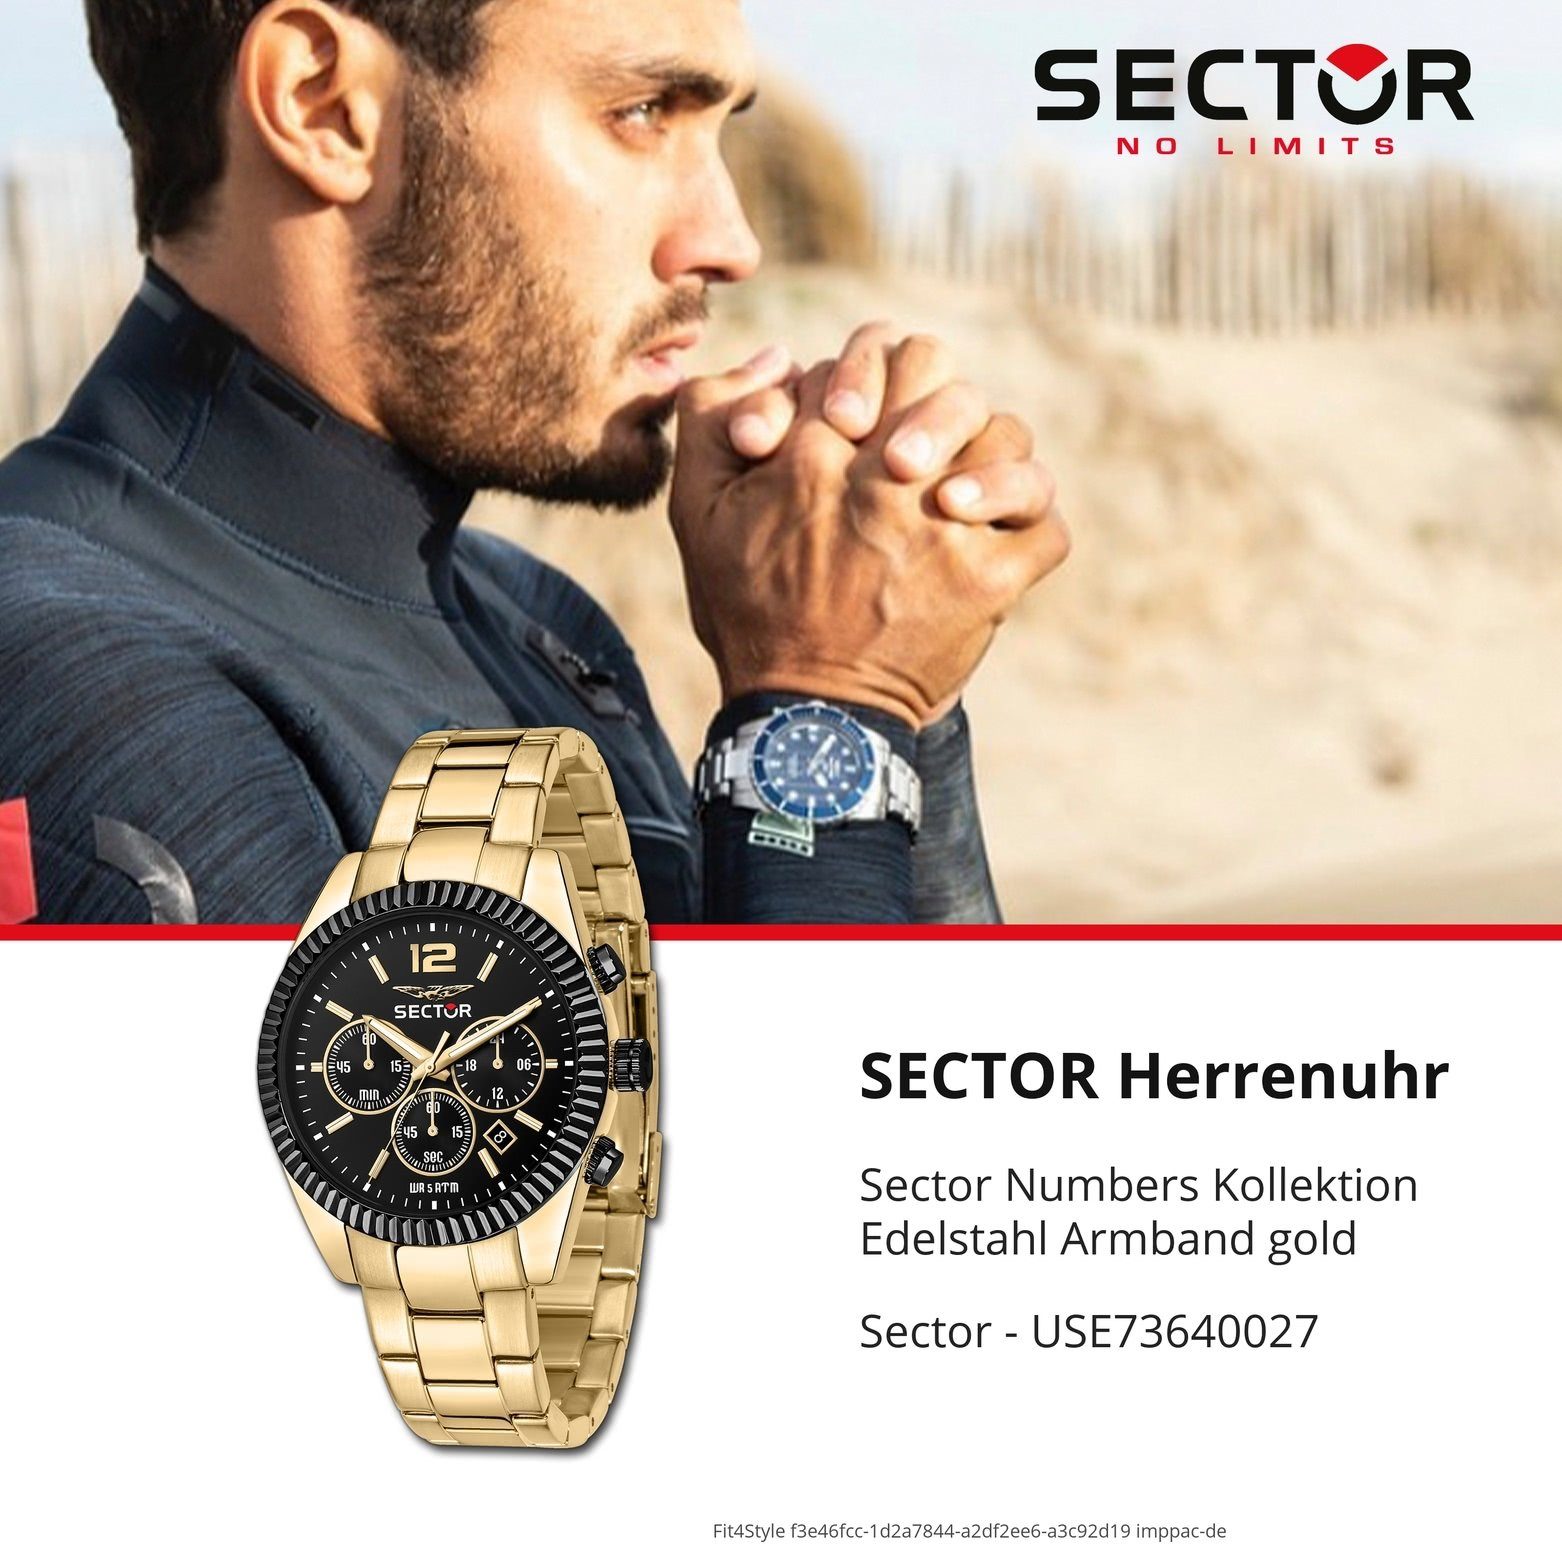 Sector No Limits Fashion Sector rund, Armbanduhr Chronograph (45mm), Armbanduhr gold, groß Herren Sector Edelstahlarmband Chrono, Herren